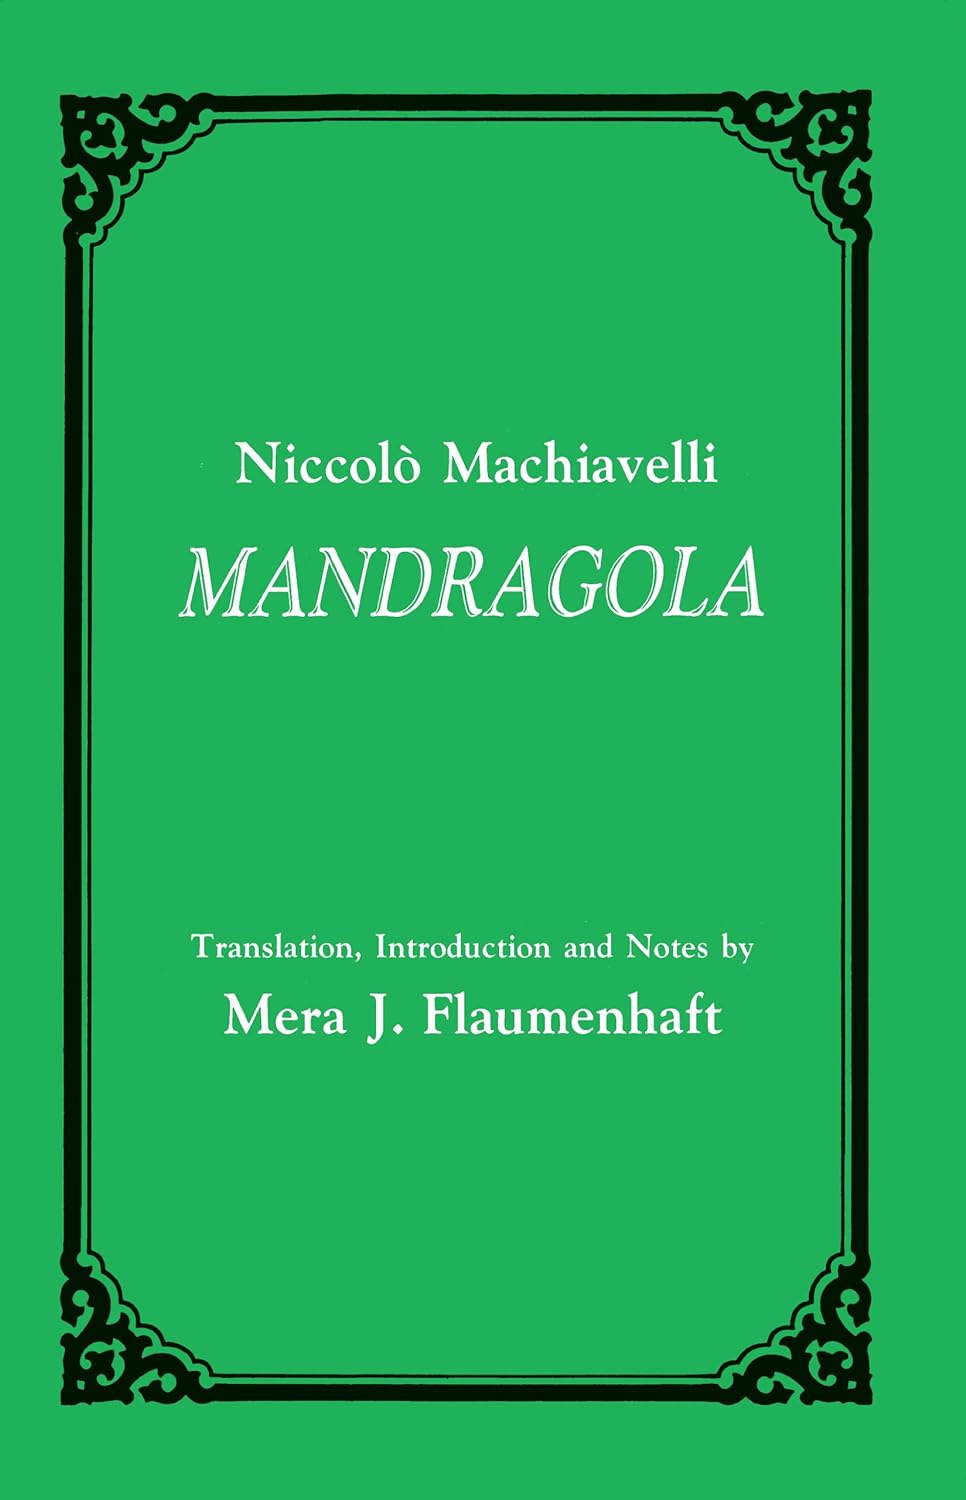 books-about-machiavelli